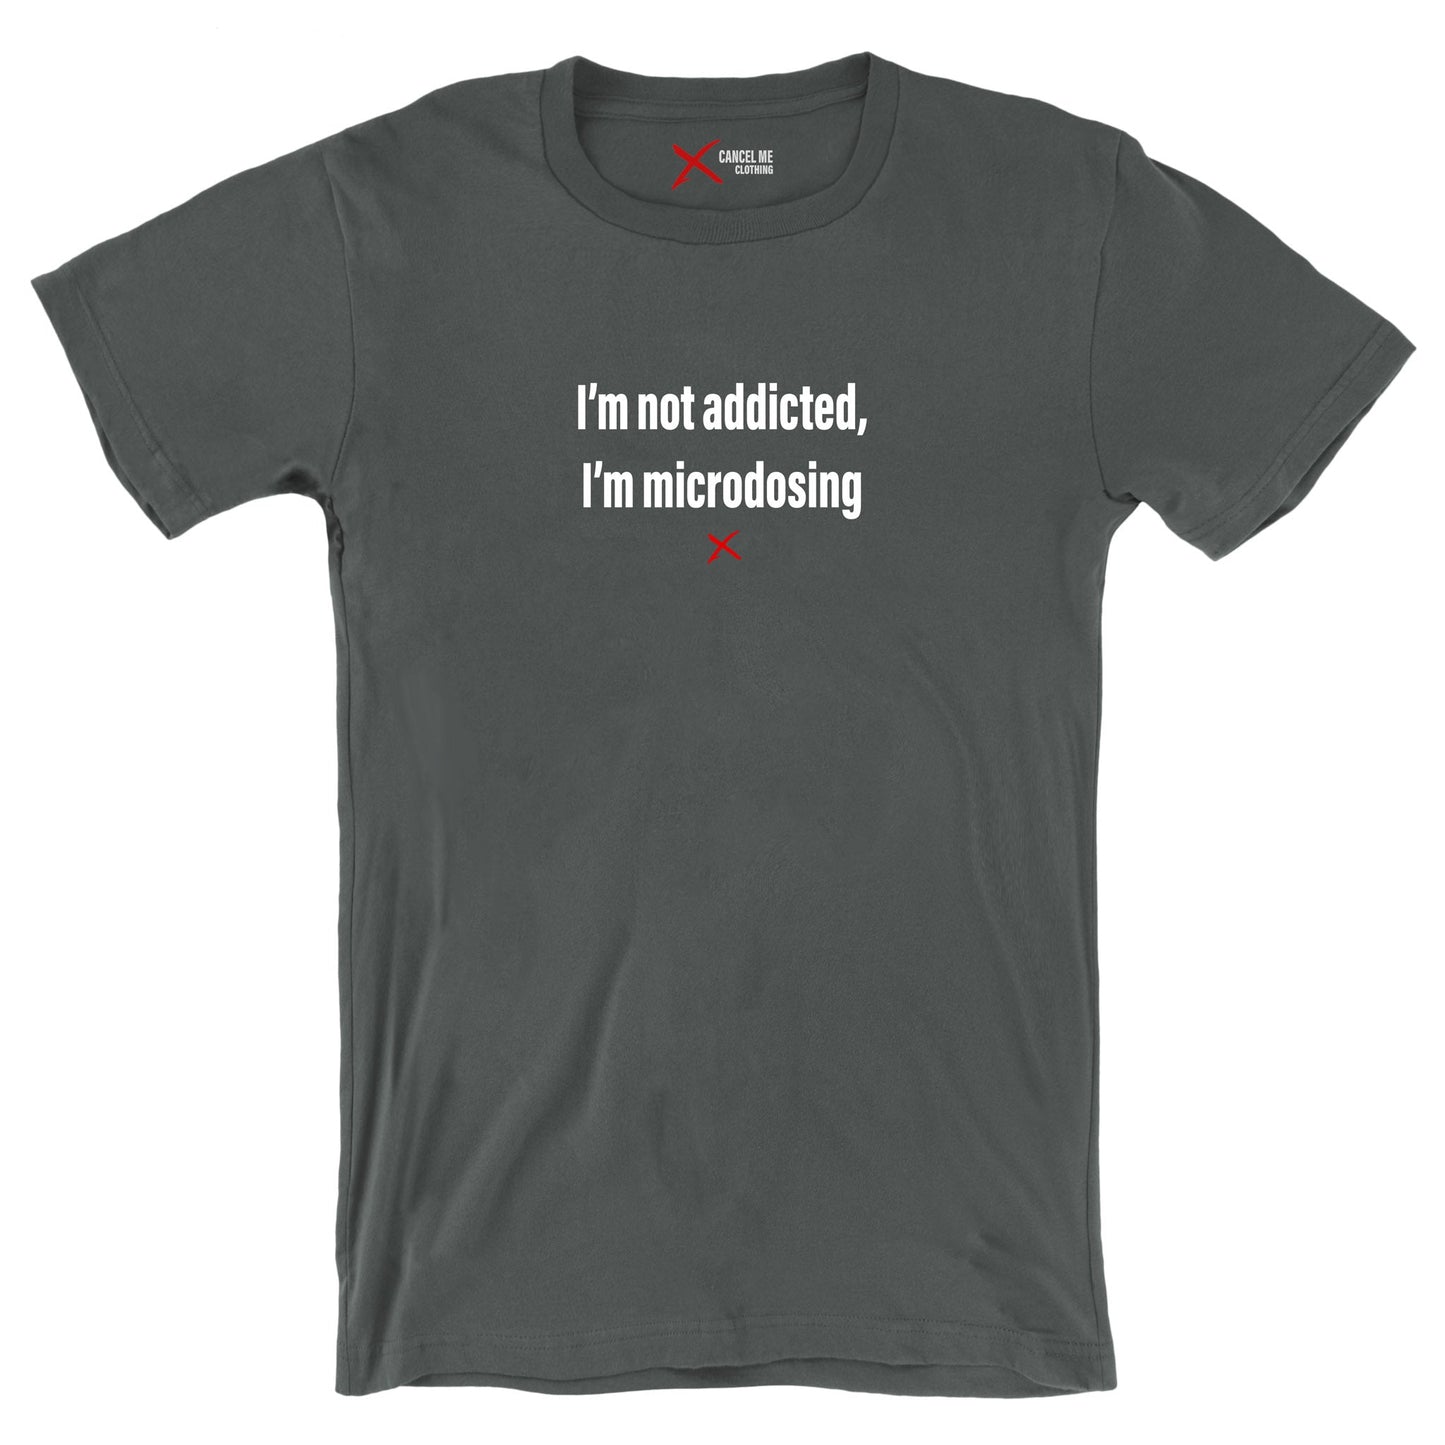 I'm not addicted, I'm microdosing - Shirt